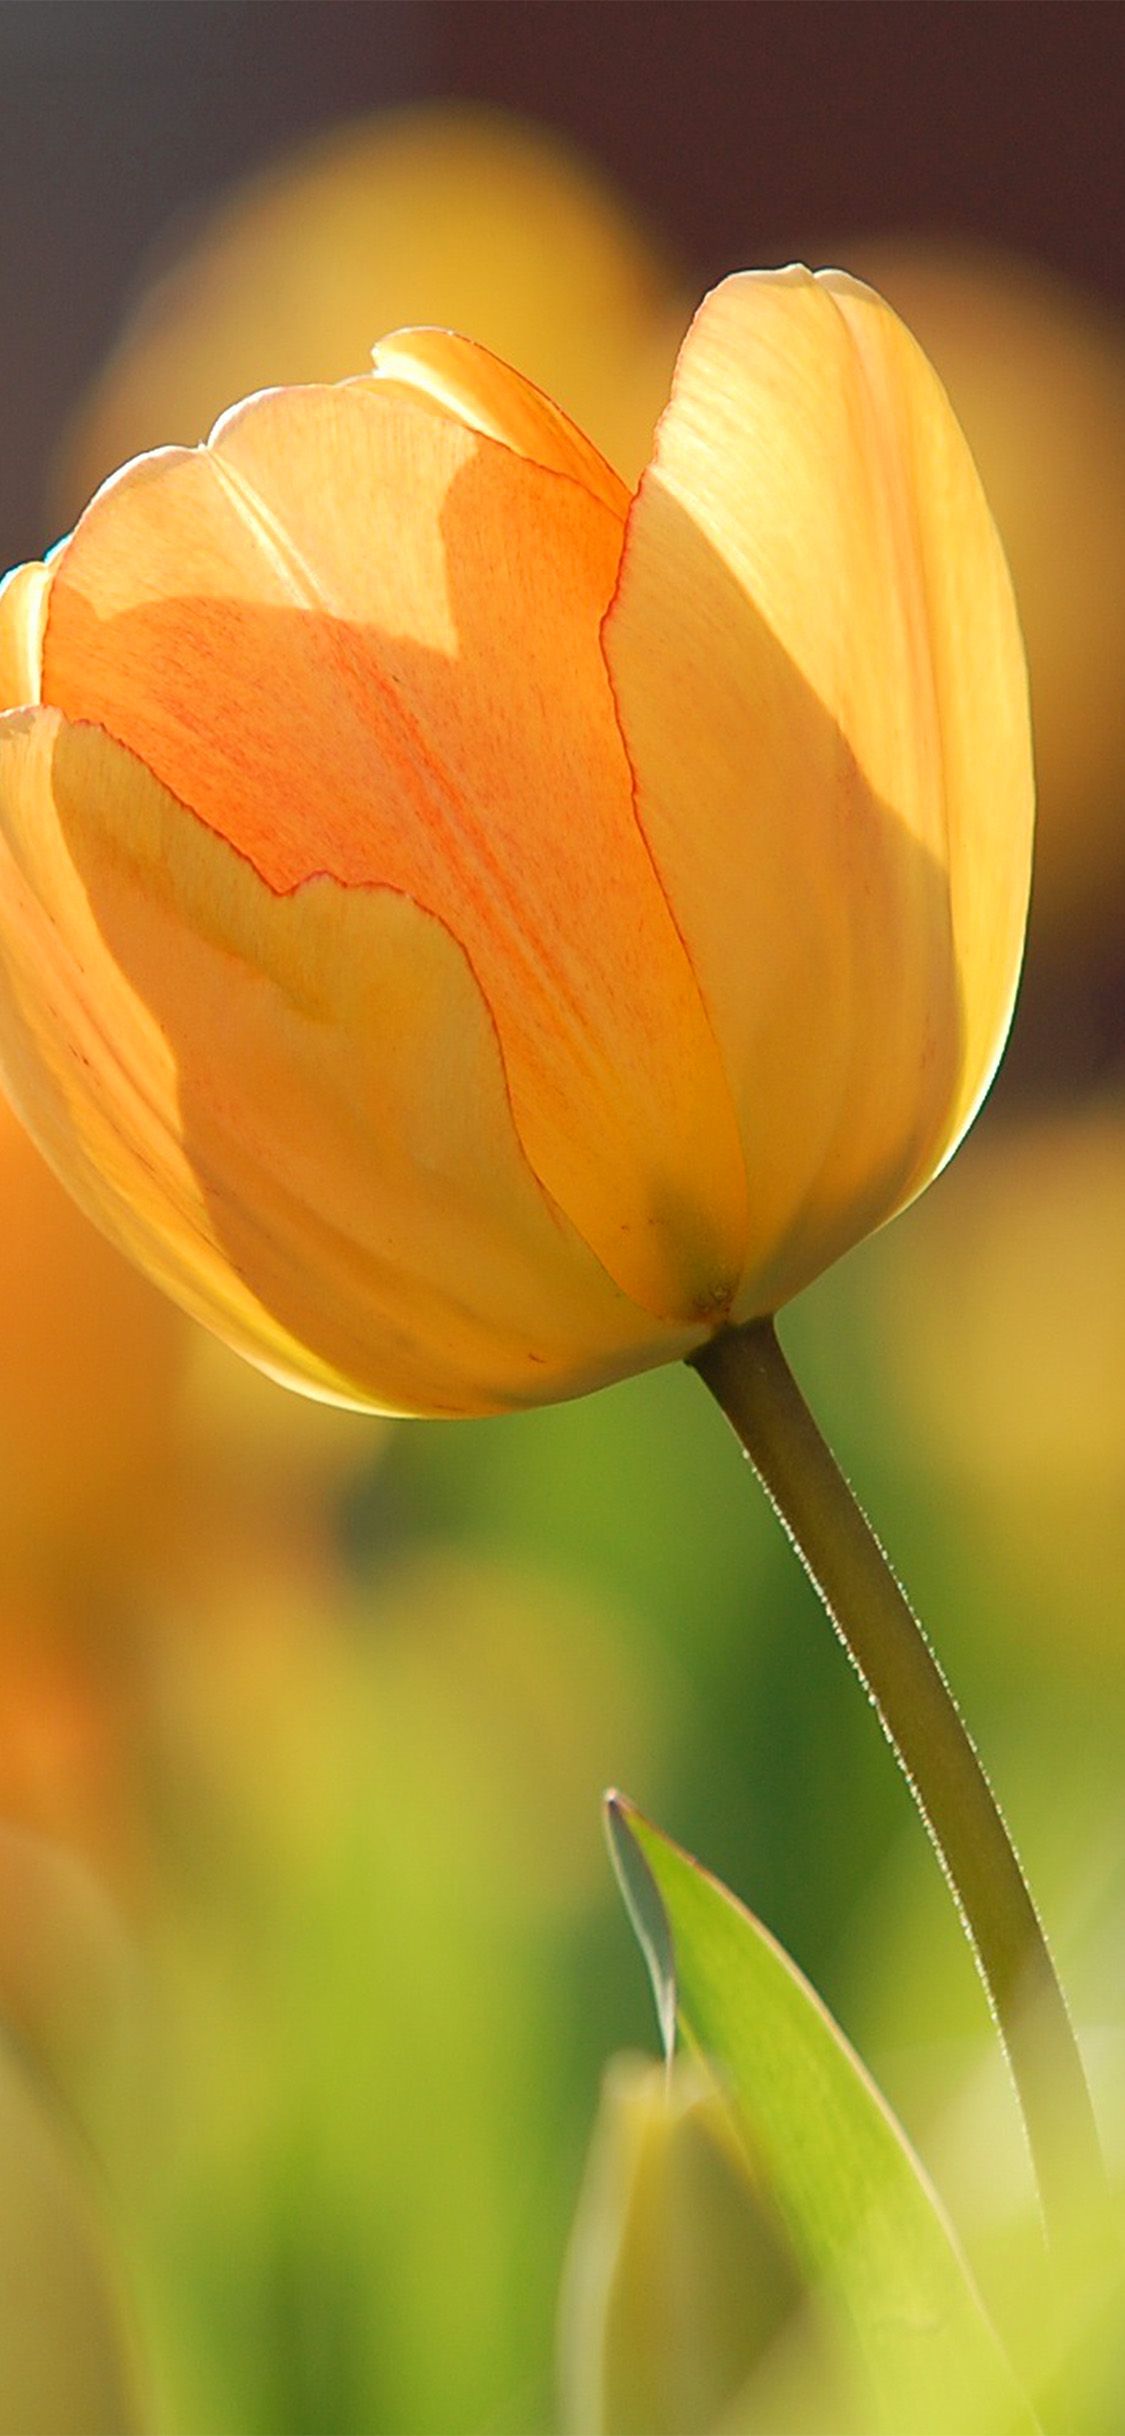 iPhone 6 Wallpaper Flowers Tulips